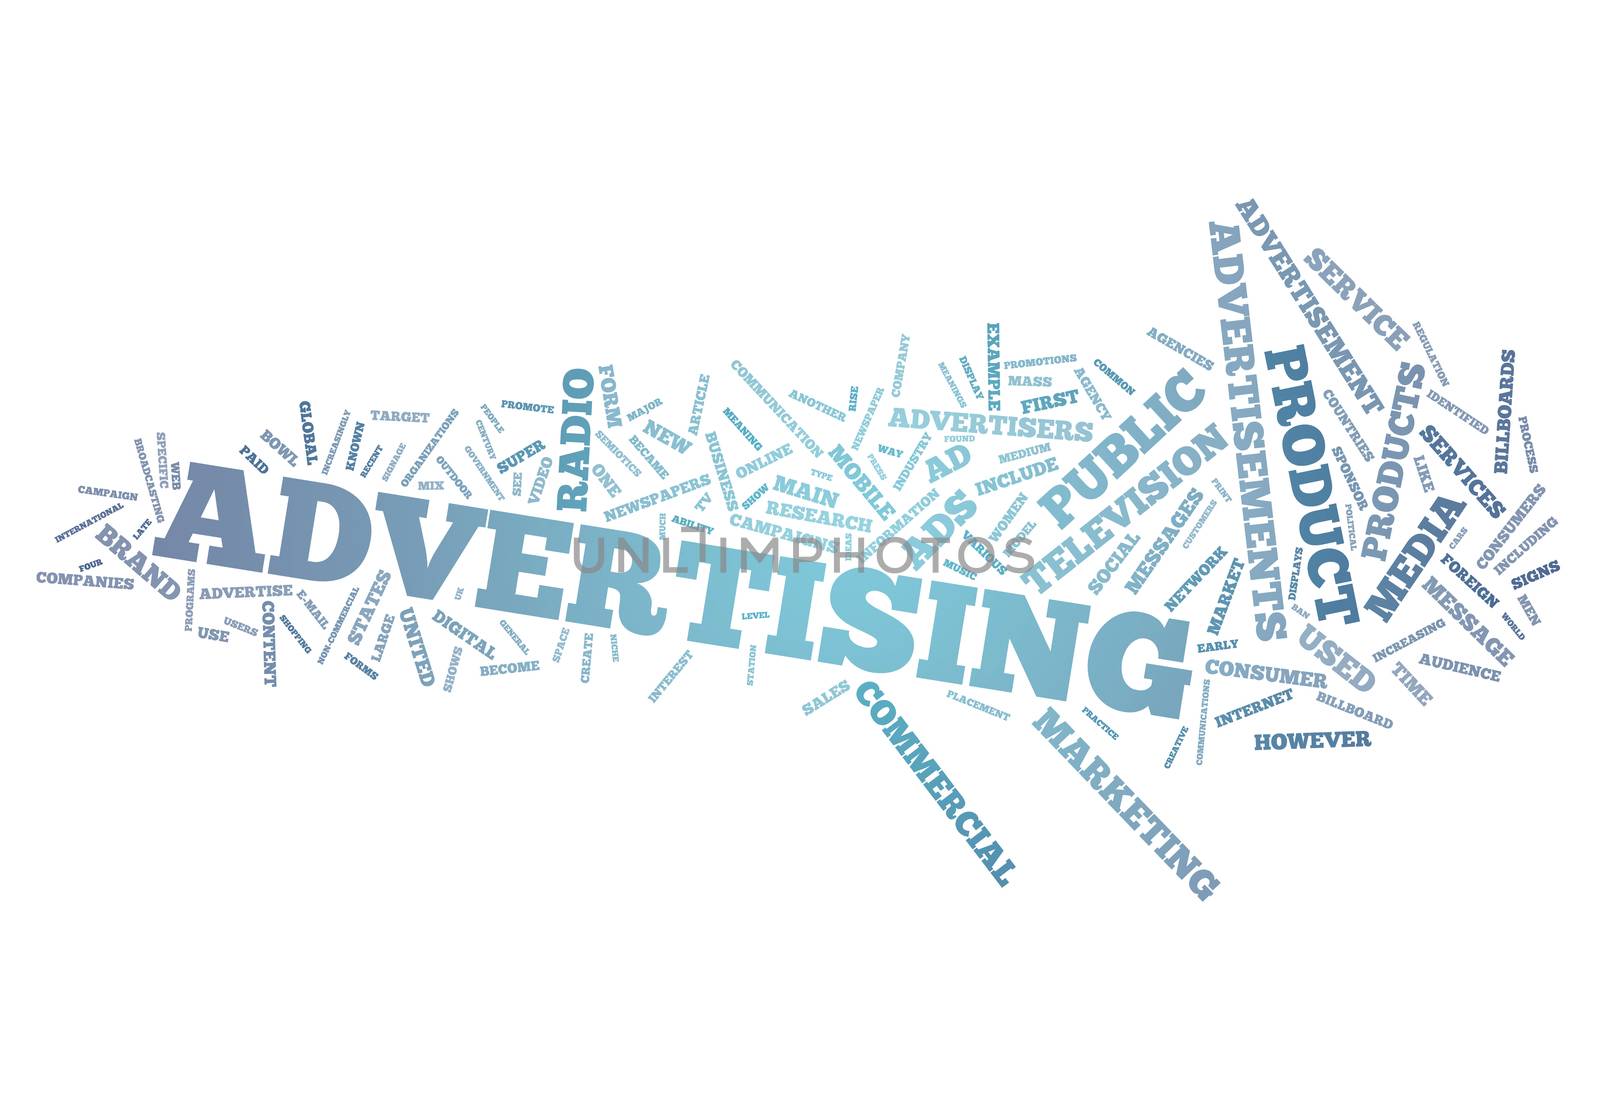 Word Cloud "Advertising" by mindscanner